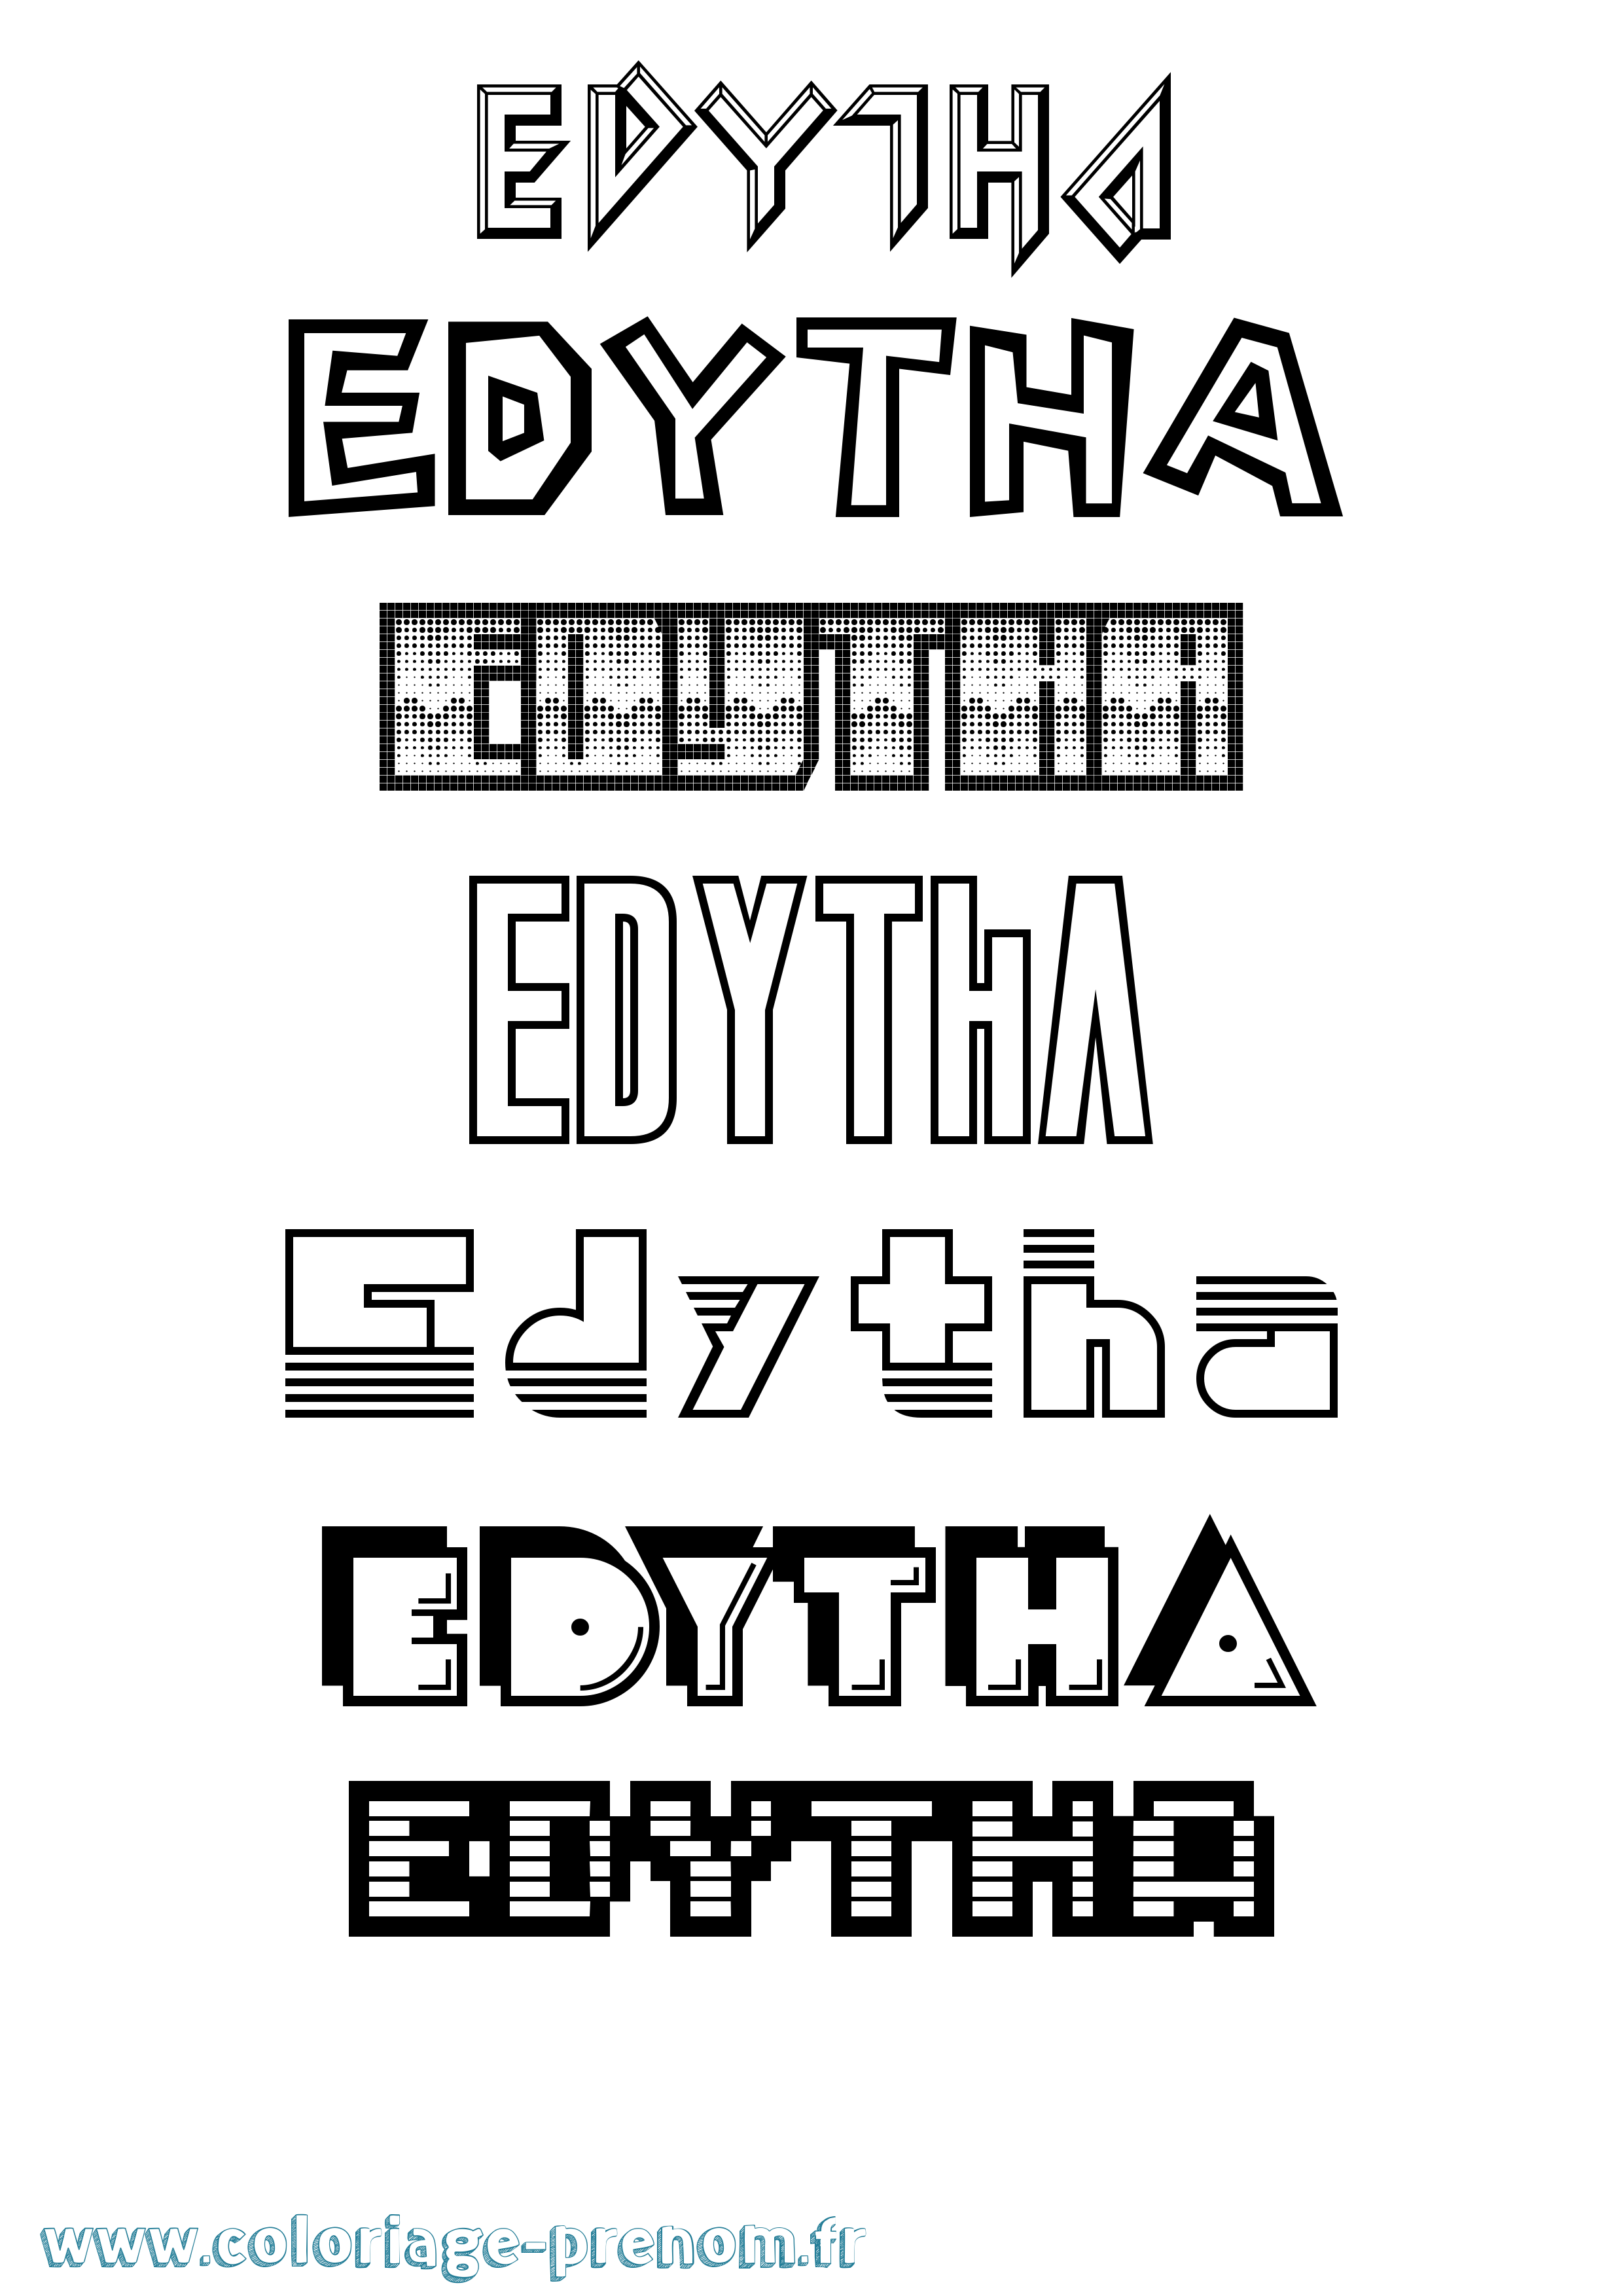 Coloriage prénom Edytha Jeux Vidéos